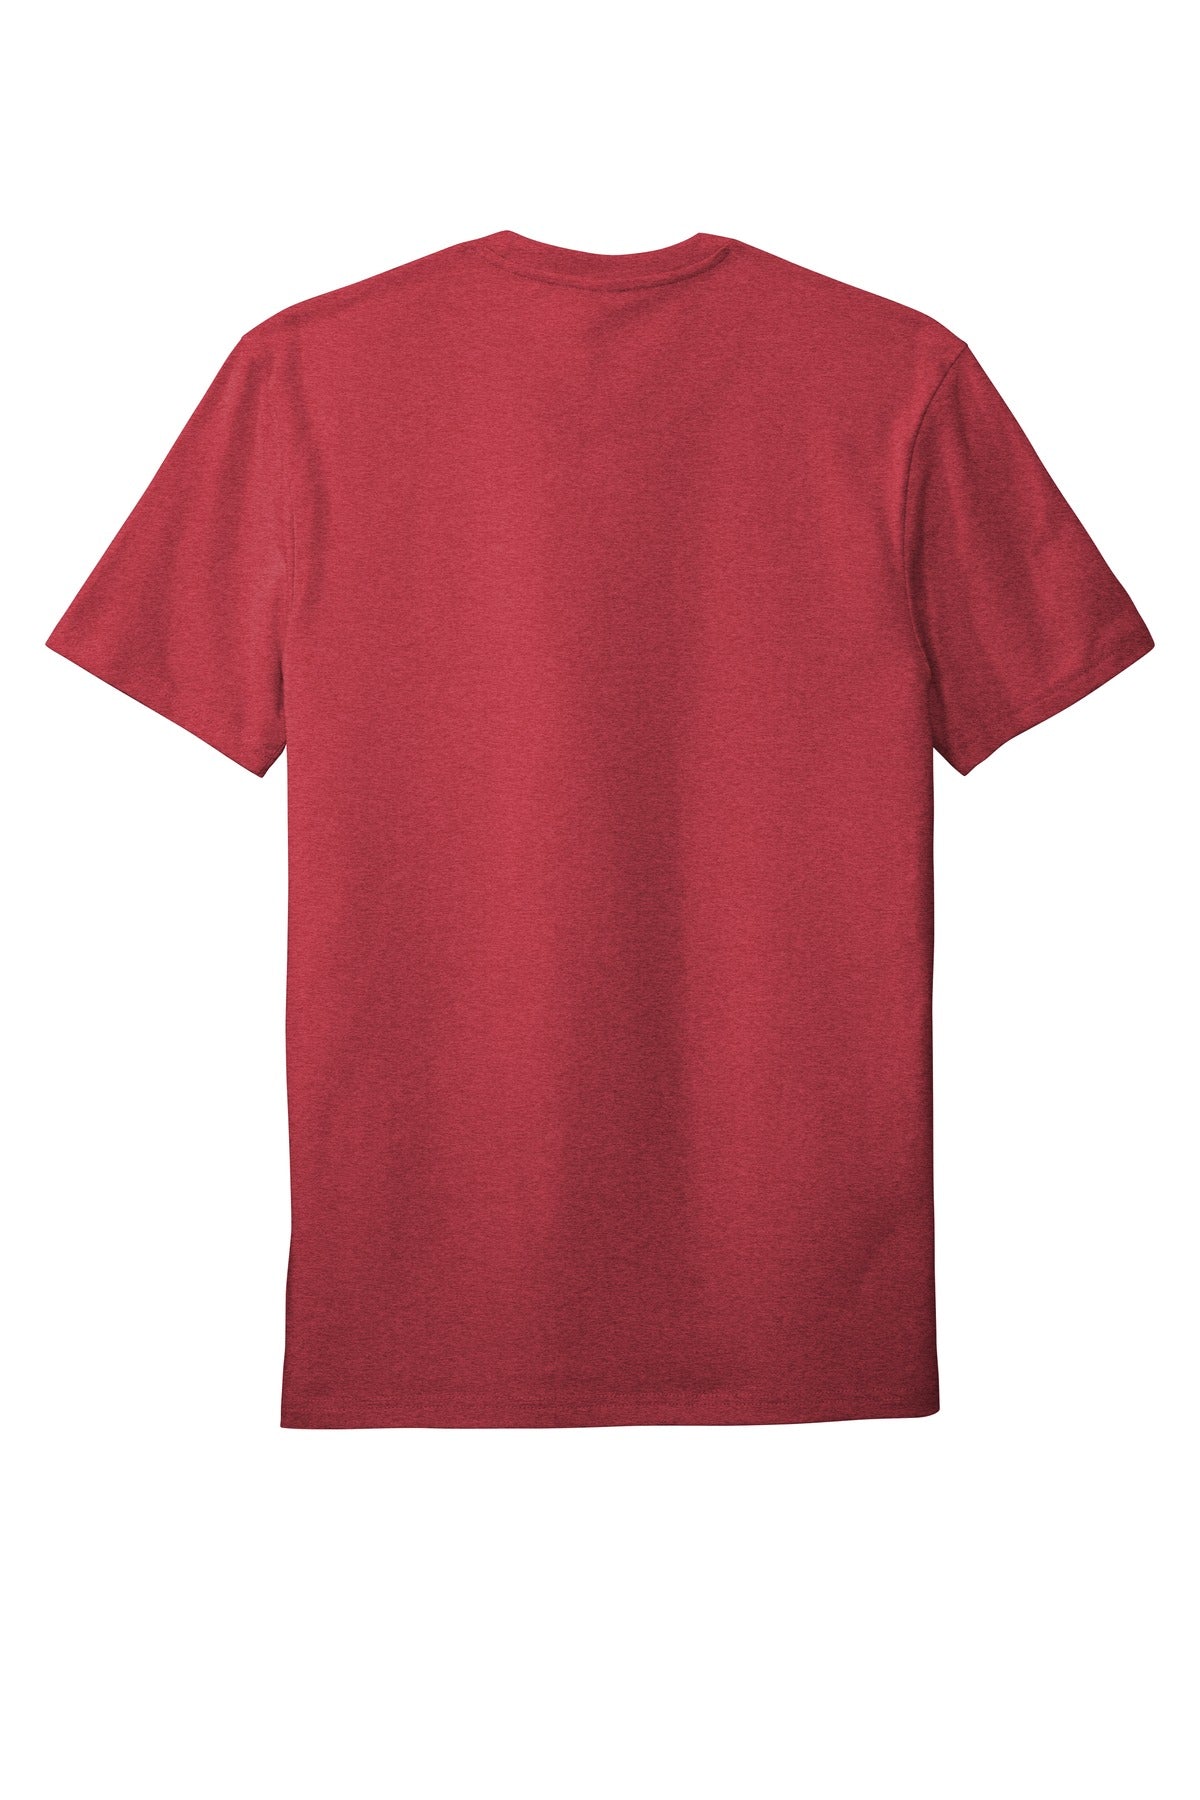 District Flex Tee DT7500 - BT Imprintables Shirts